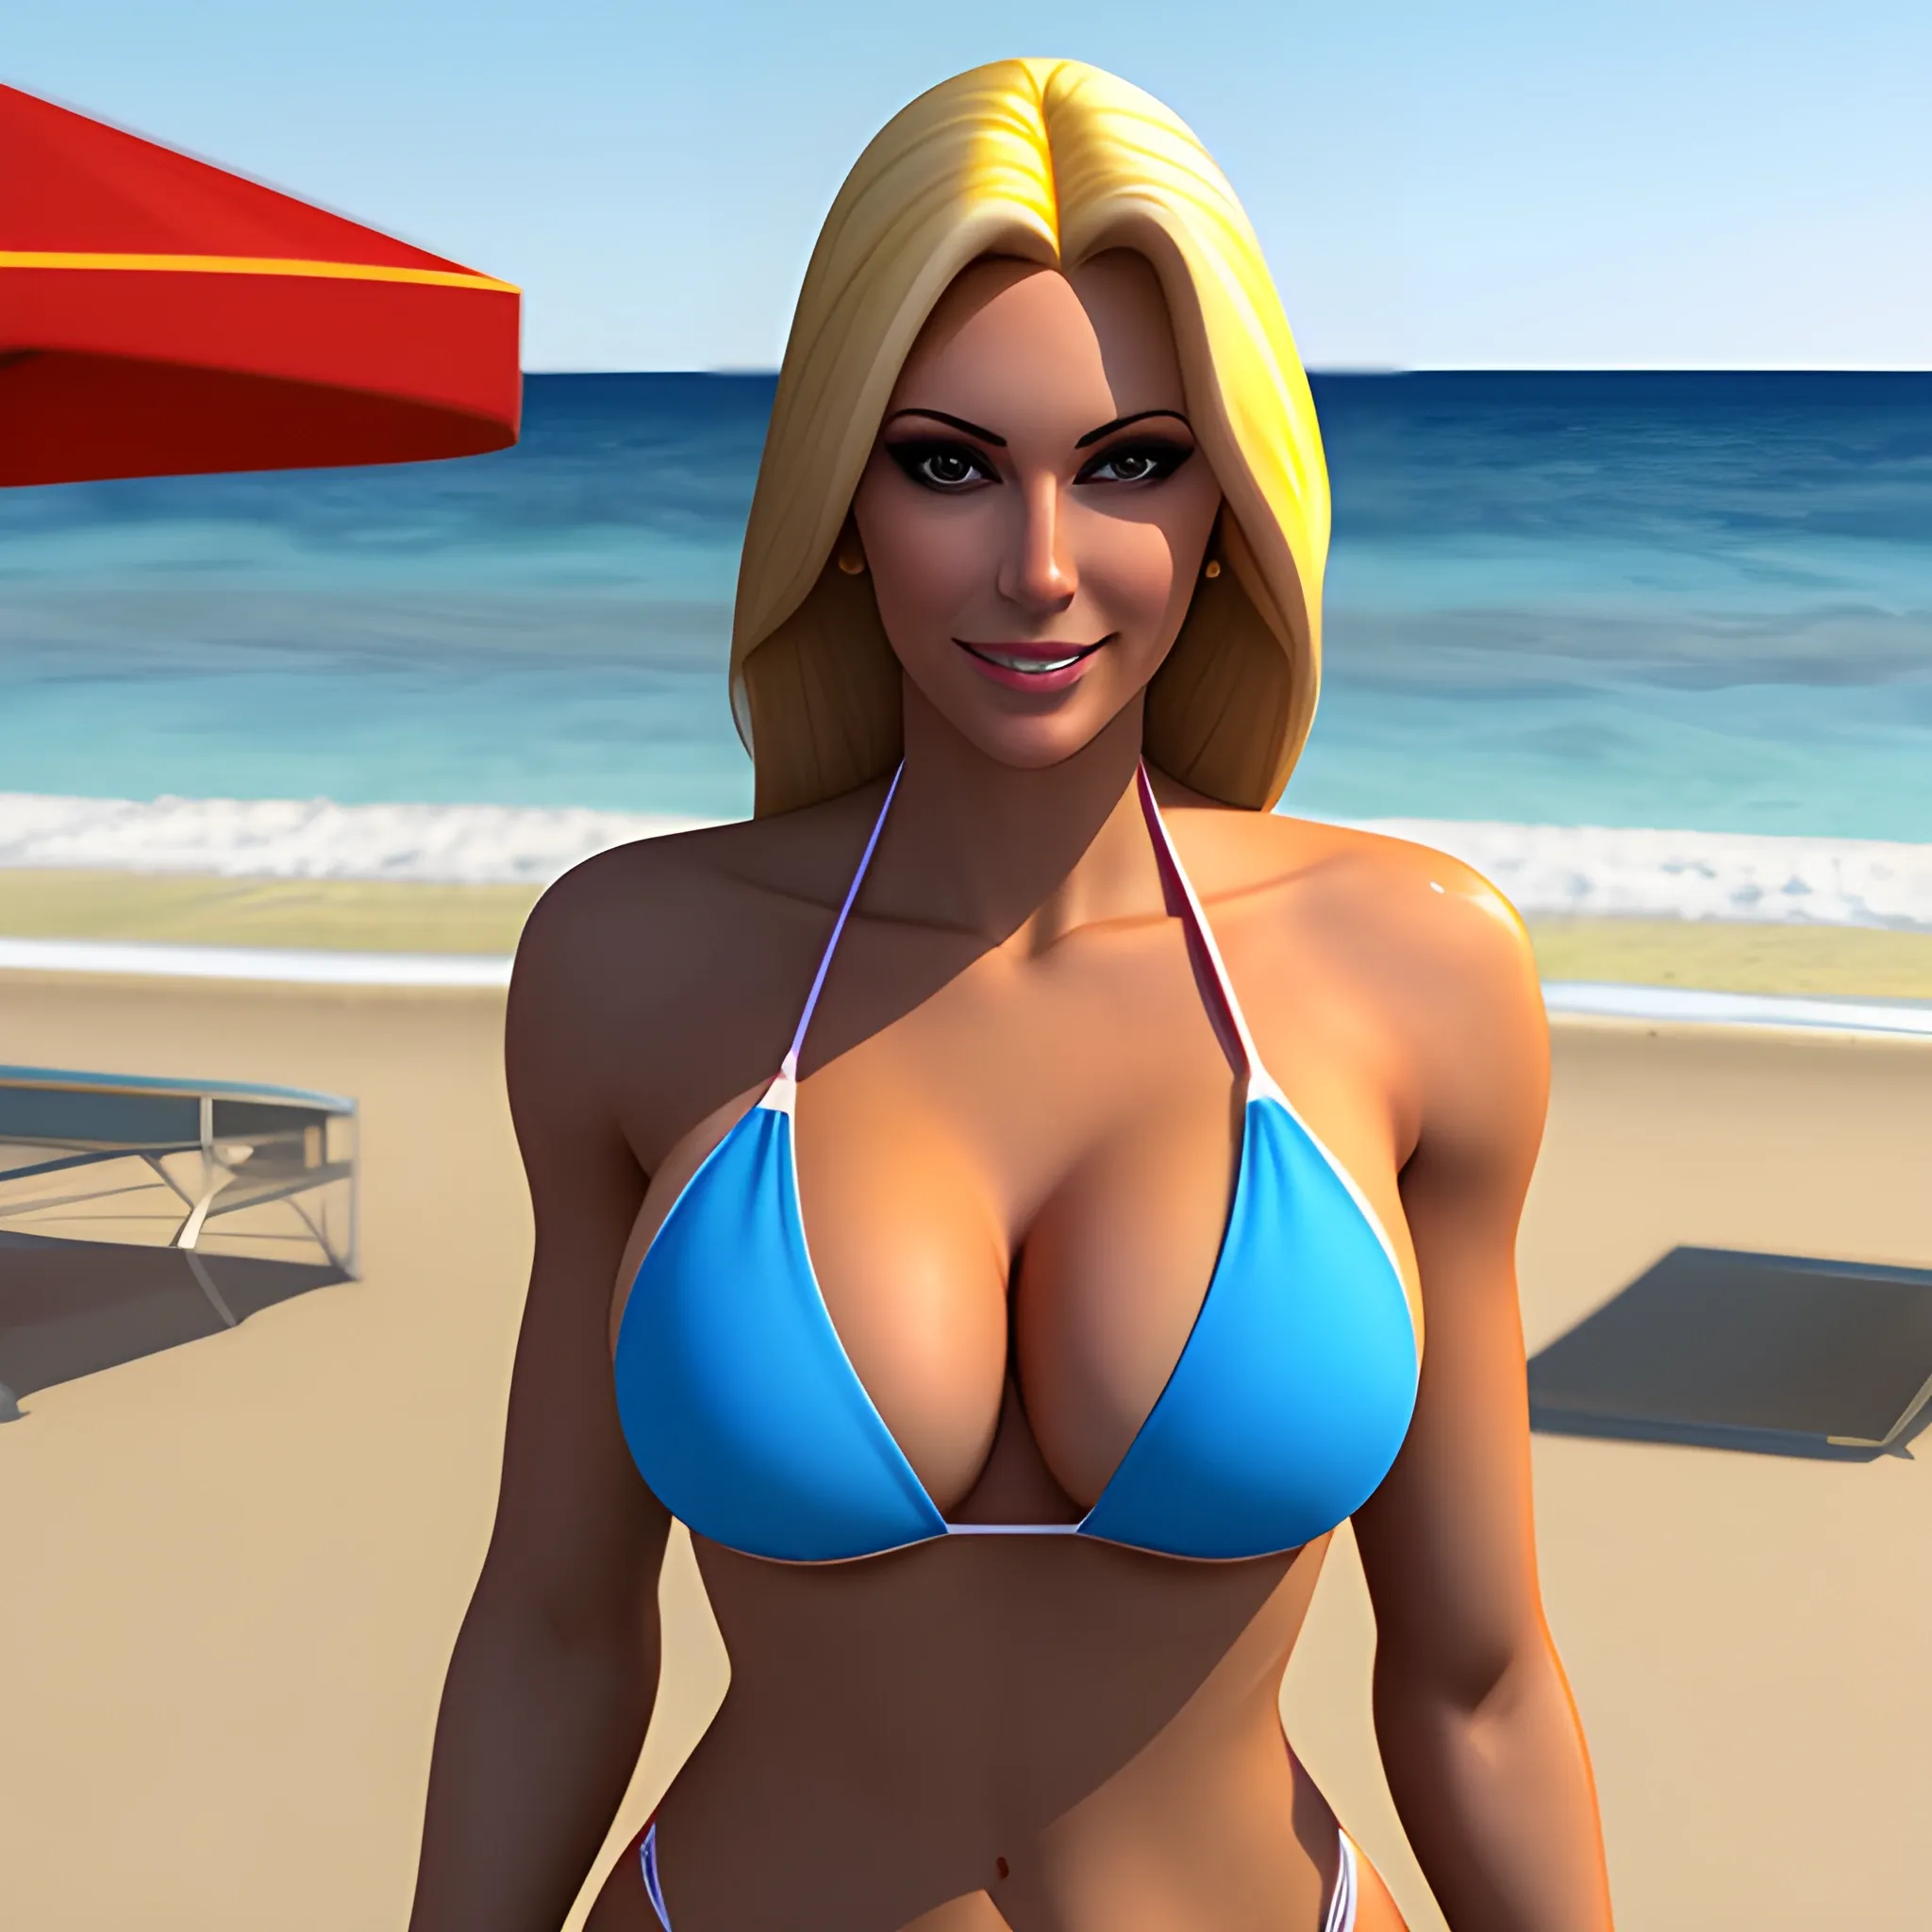 Blond girl at beach in bikini, 3D